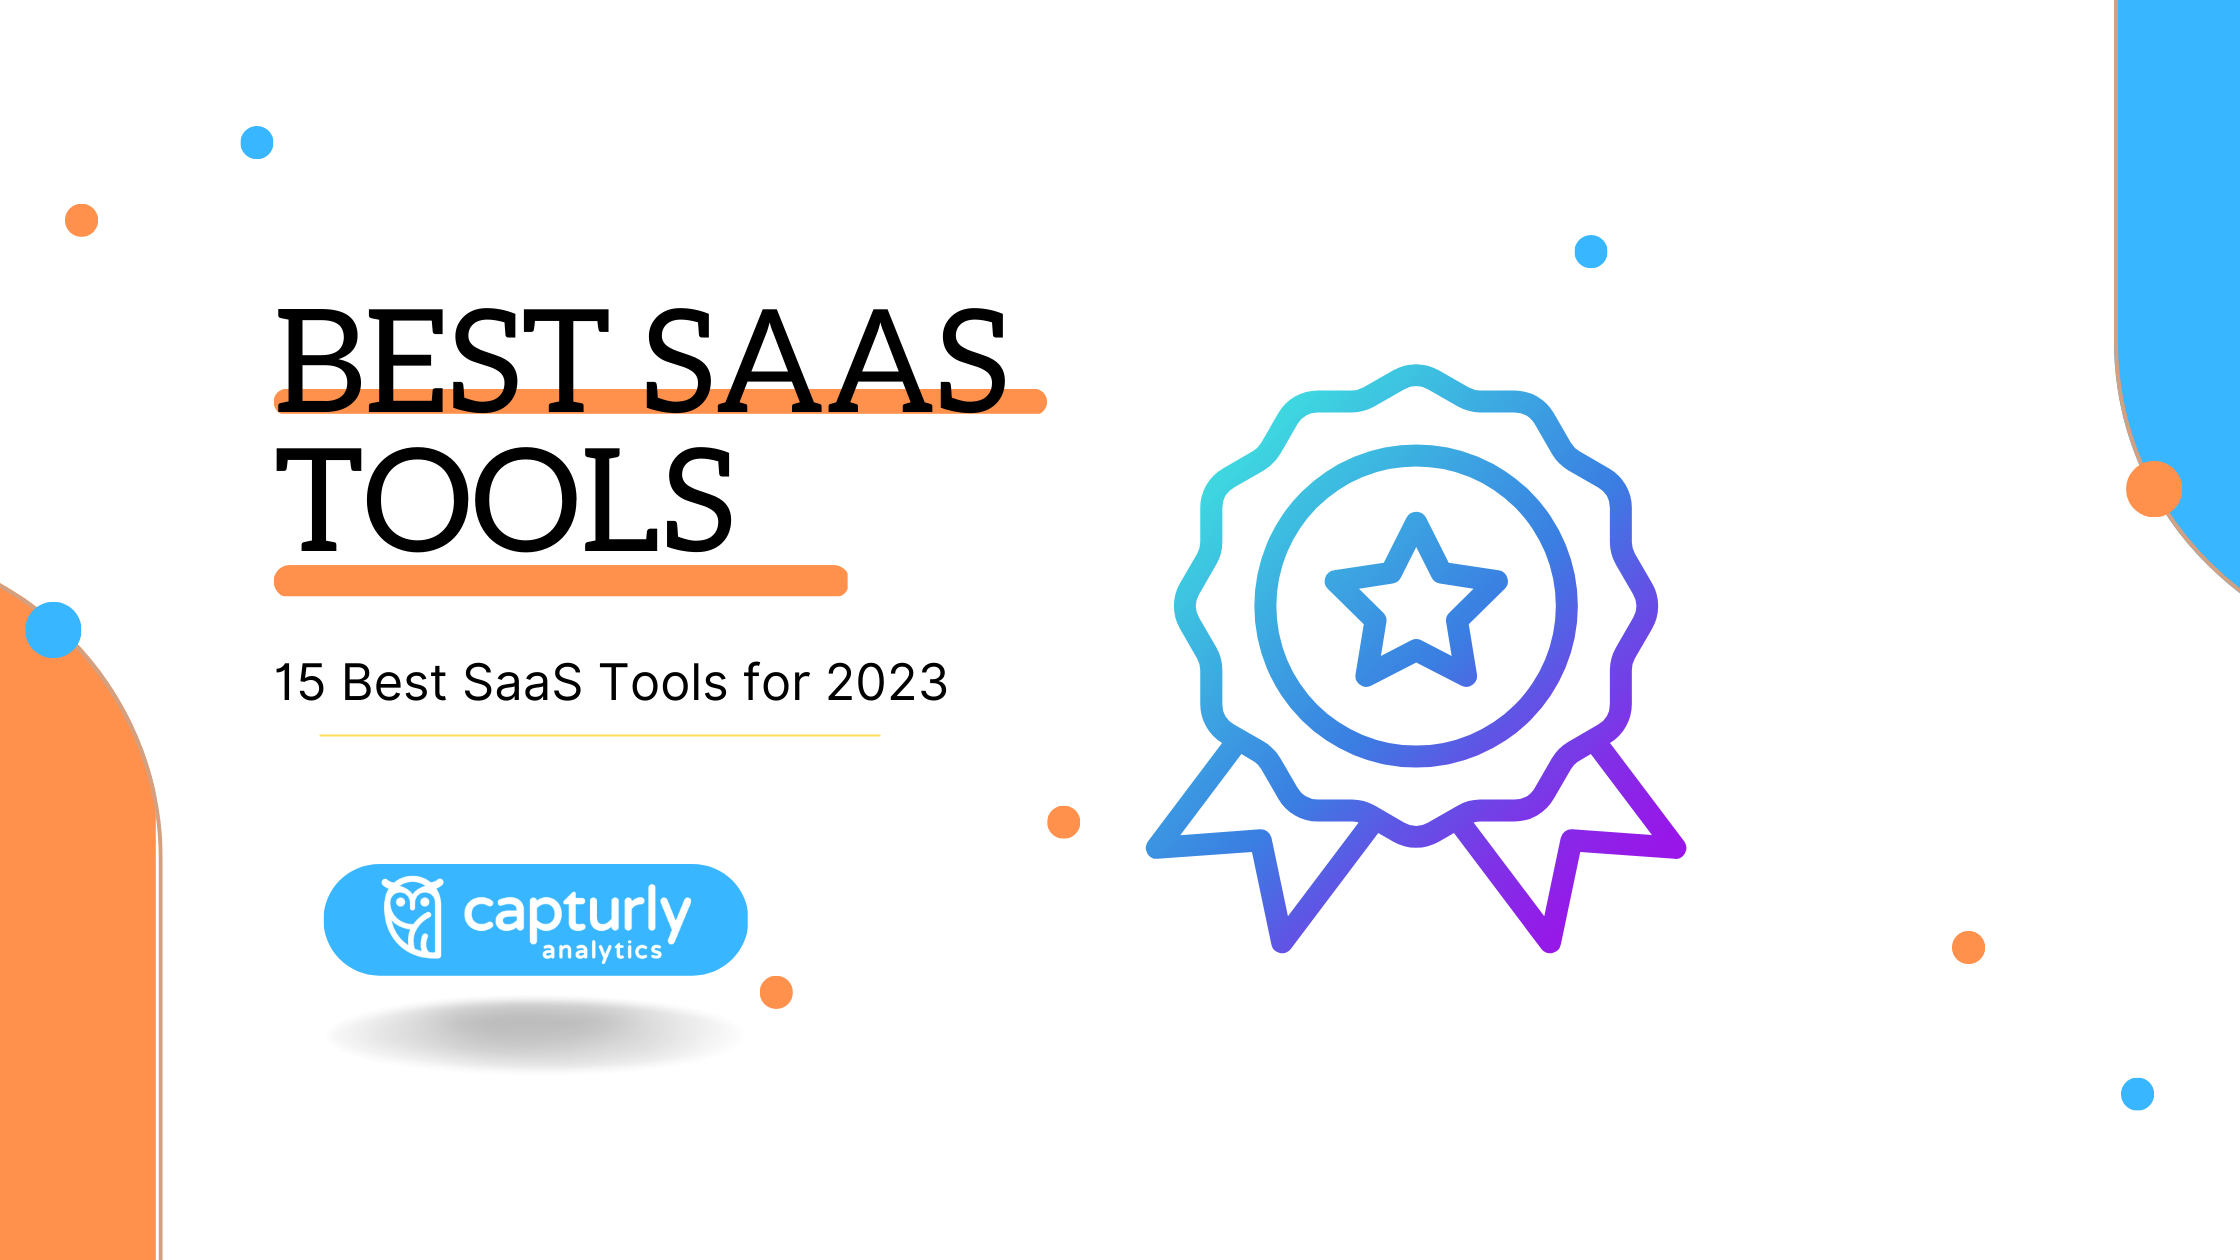 15 Best SaaS Tools for 2023